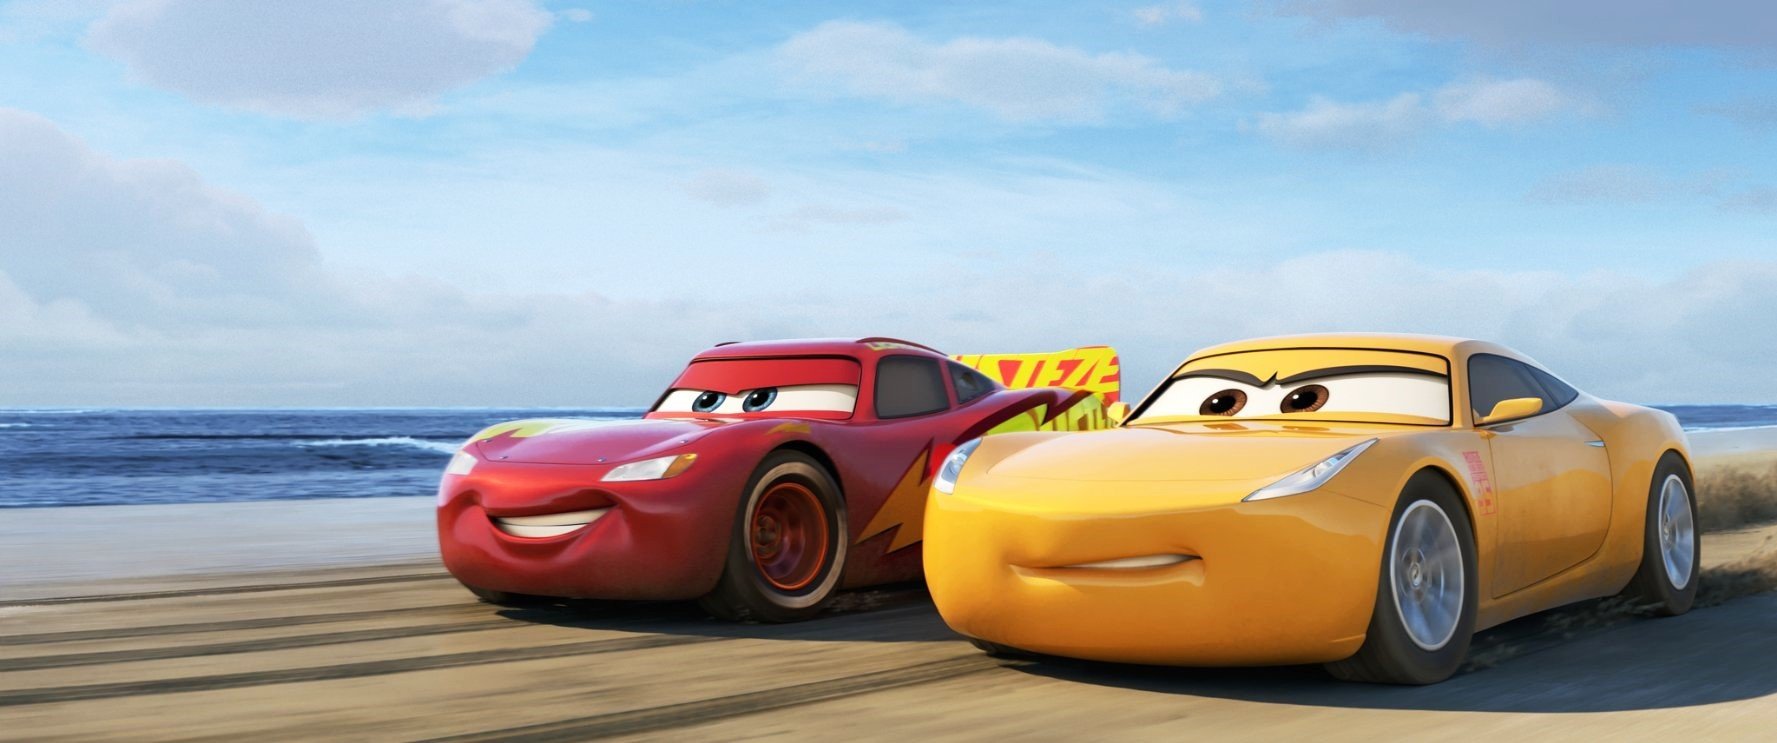 Lightning McQueen and Cruz Ramirez from Walt Disney Pictures' Cars 3 (2017)